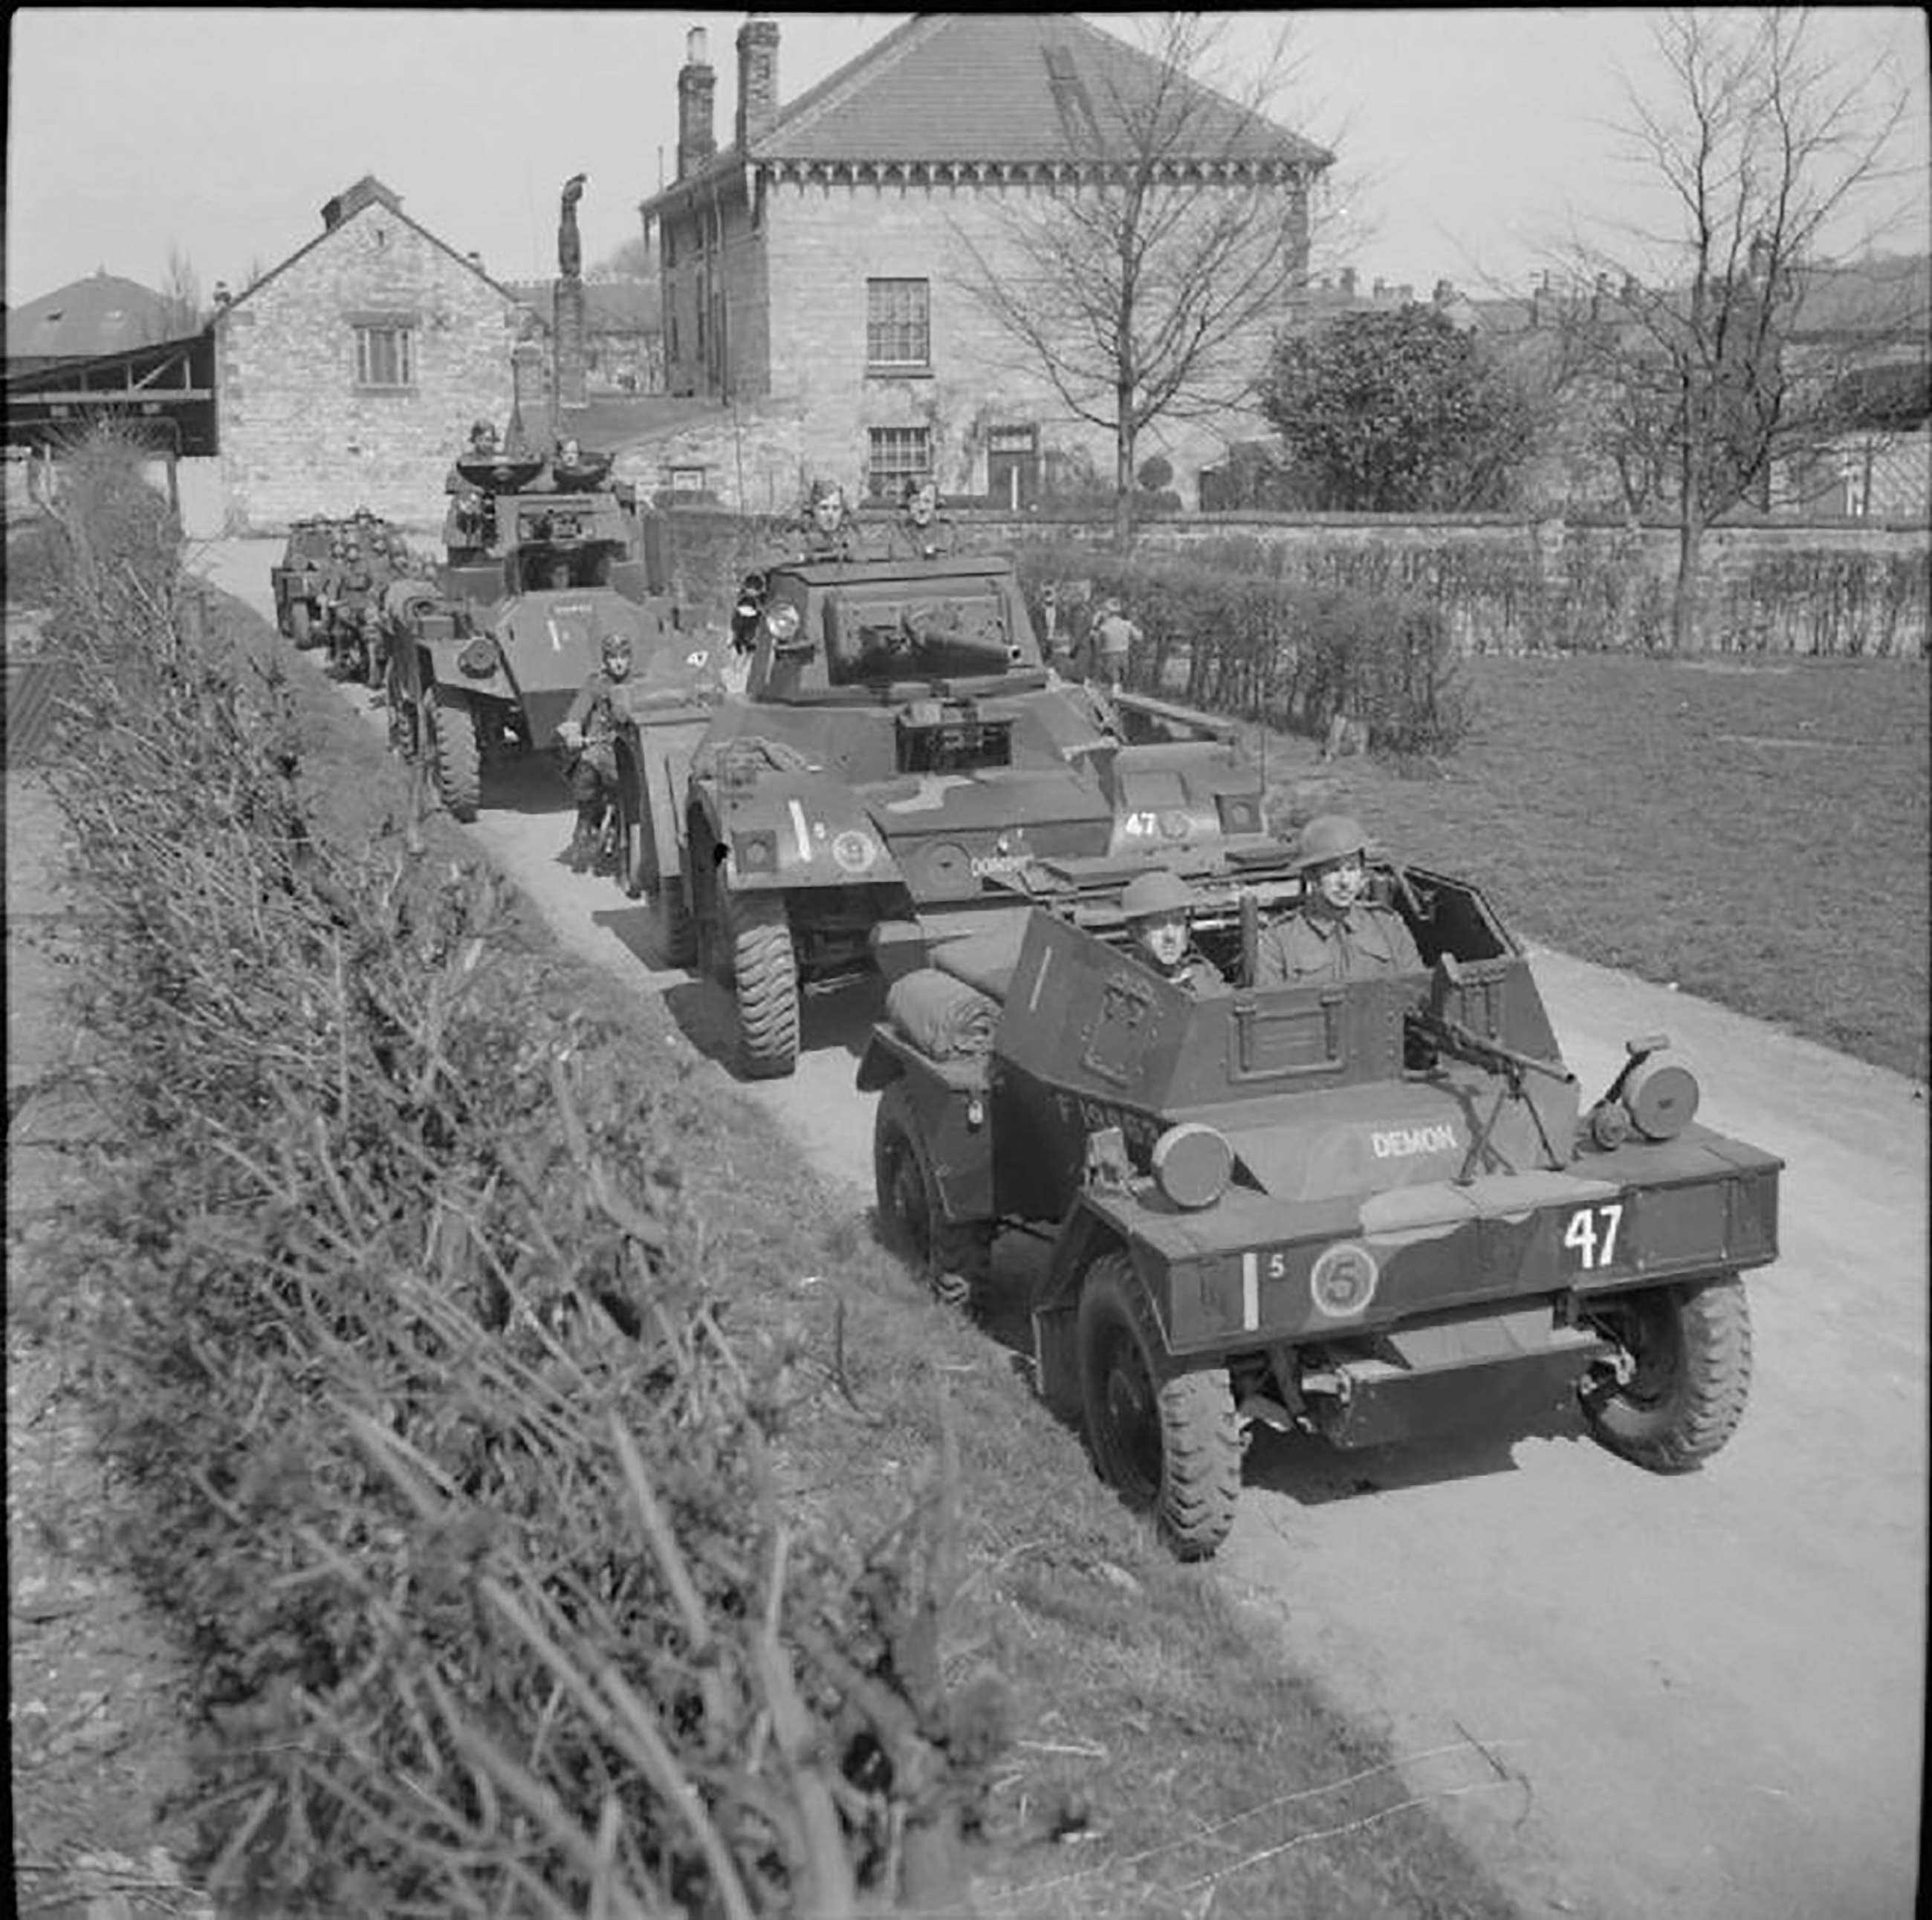 A Dingo, a Daimler Armoured Car and a Humber Armoured Car, 1942